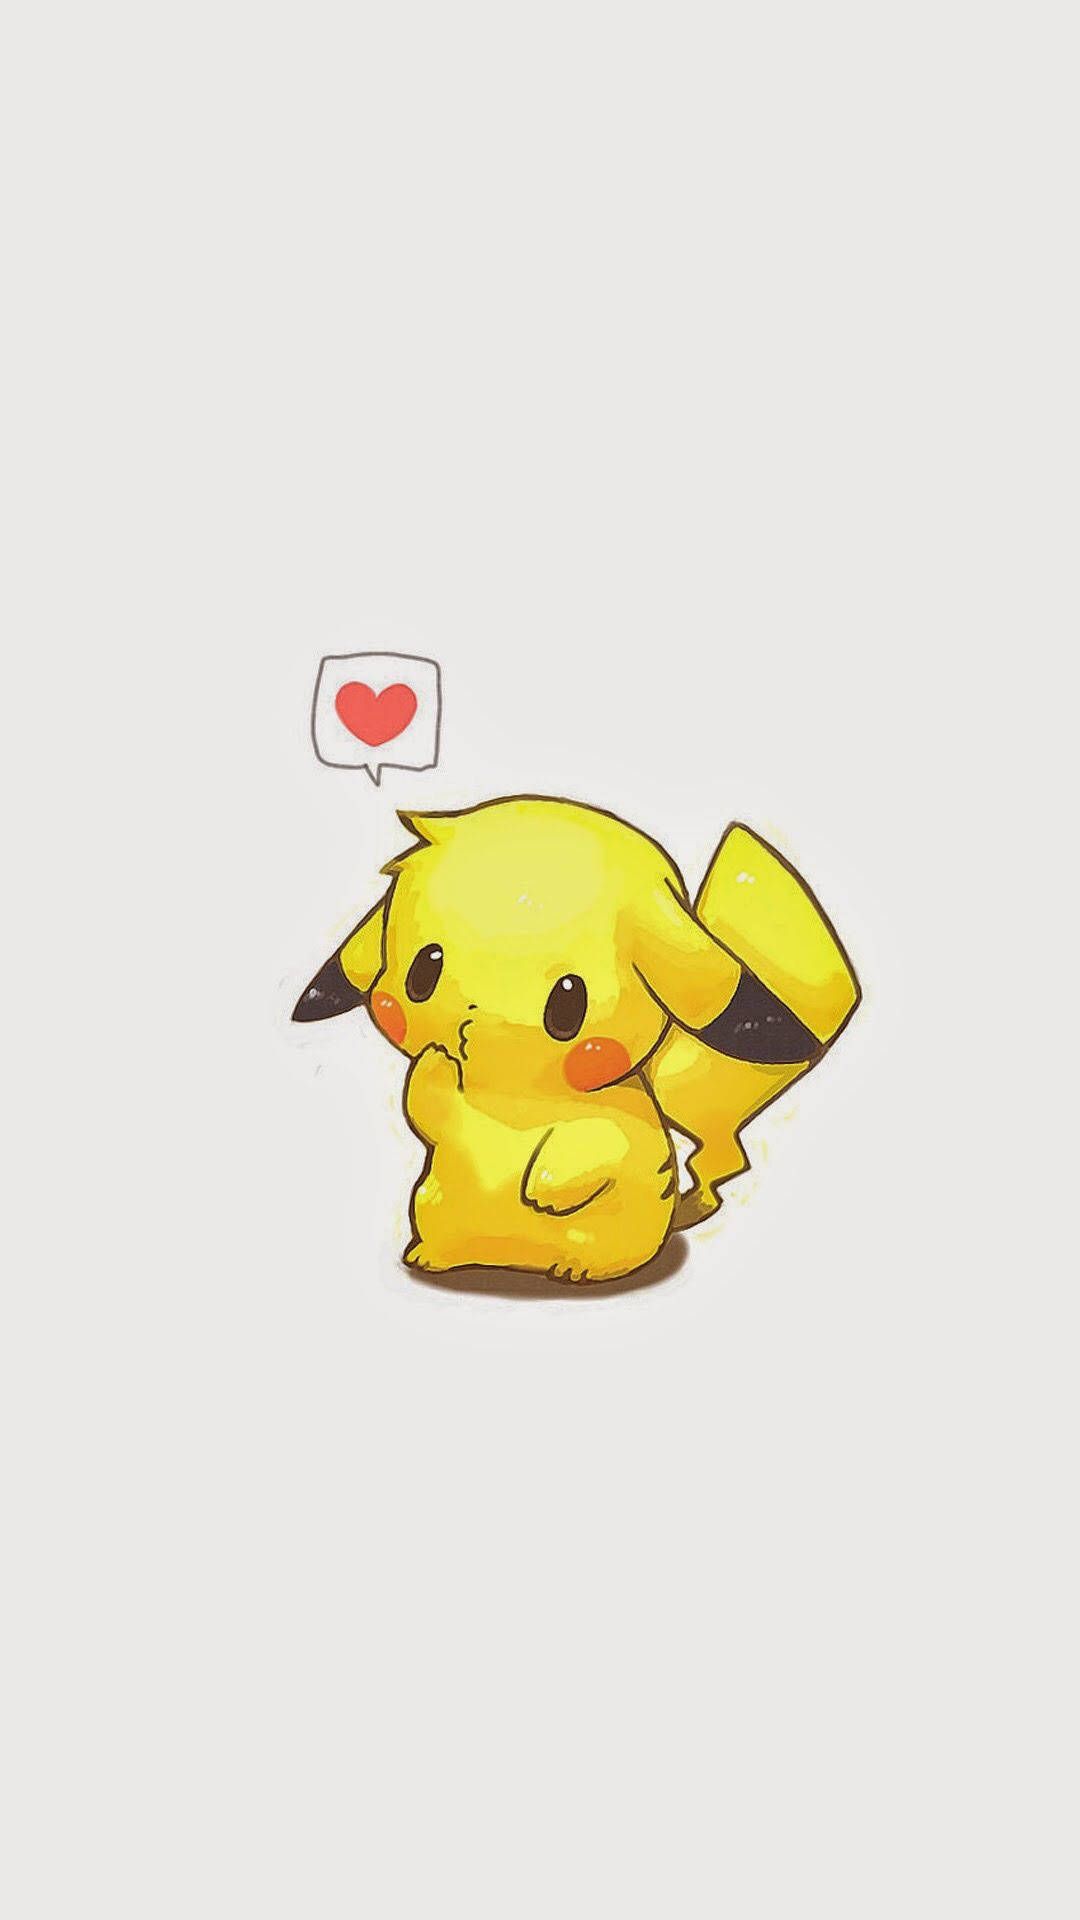 Pikachu with a heart and speech bubble - Pikachu